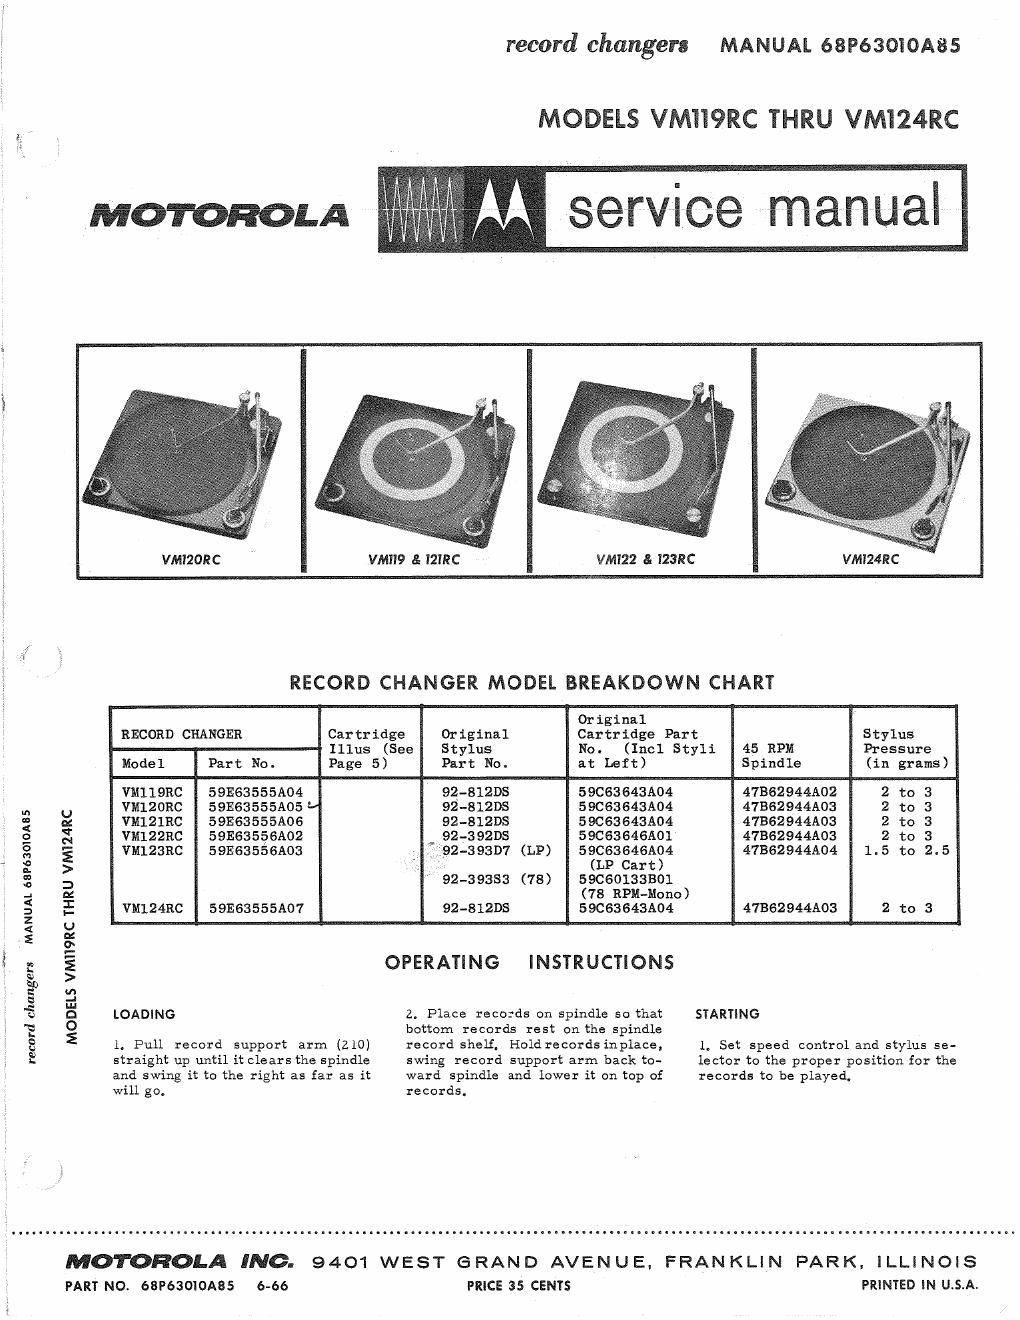 motorola vm 124 rc service manual